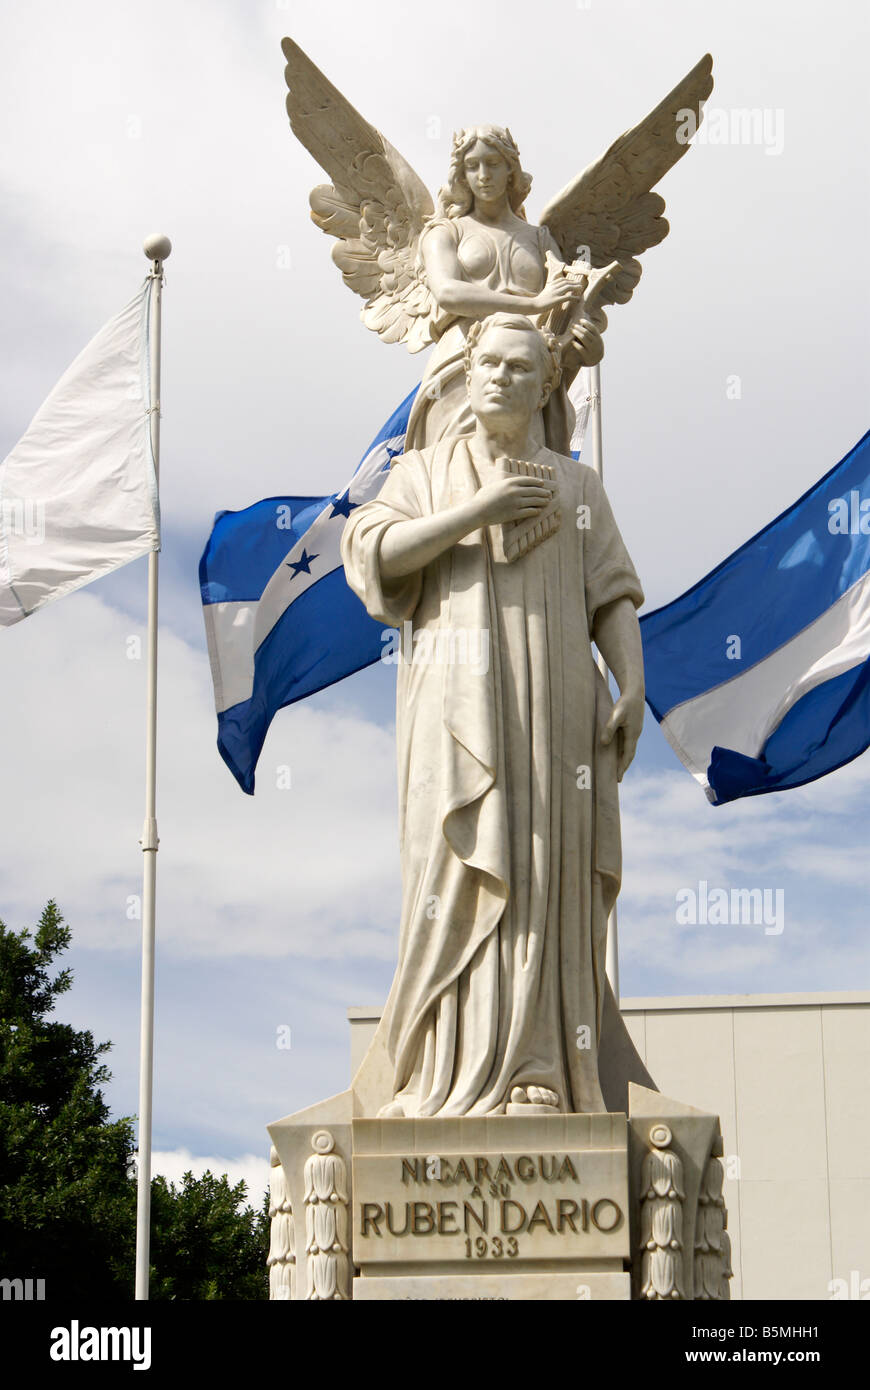 The Monumento a Ruben Dario monument in downtown Managua, Nicaragua Stock Photo